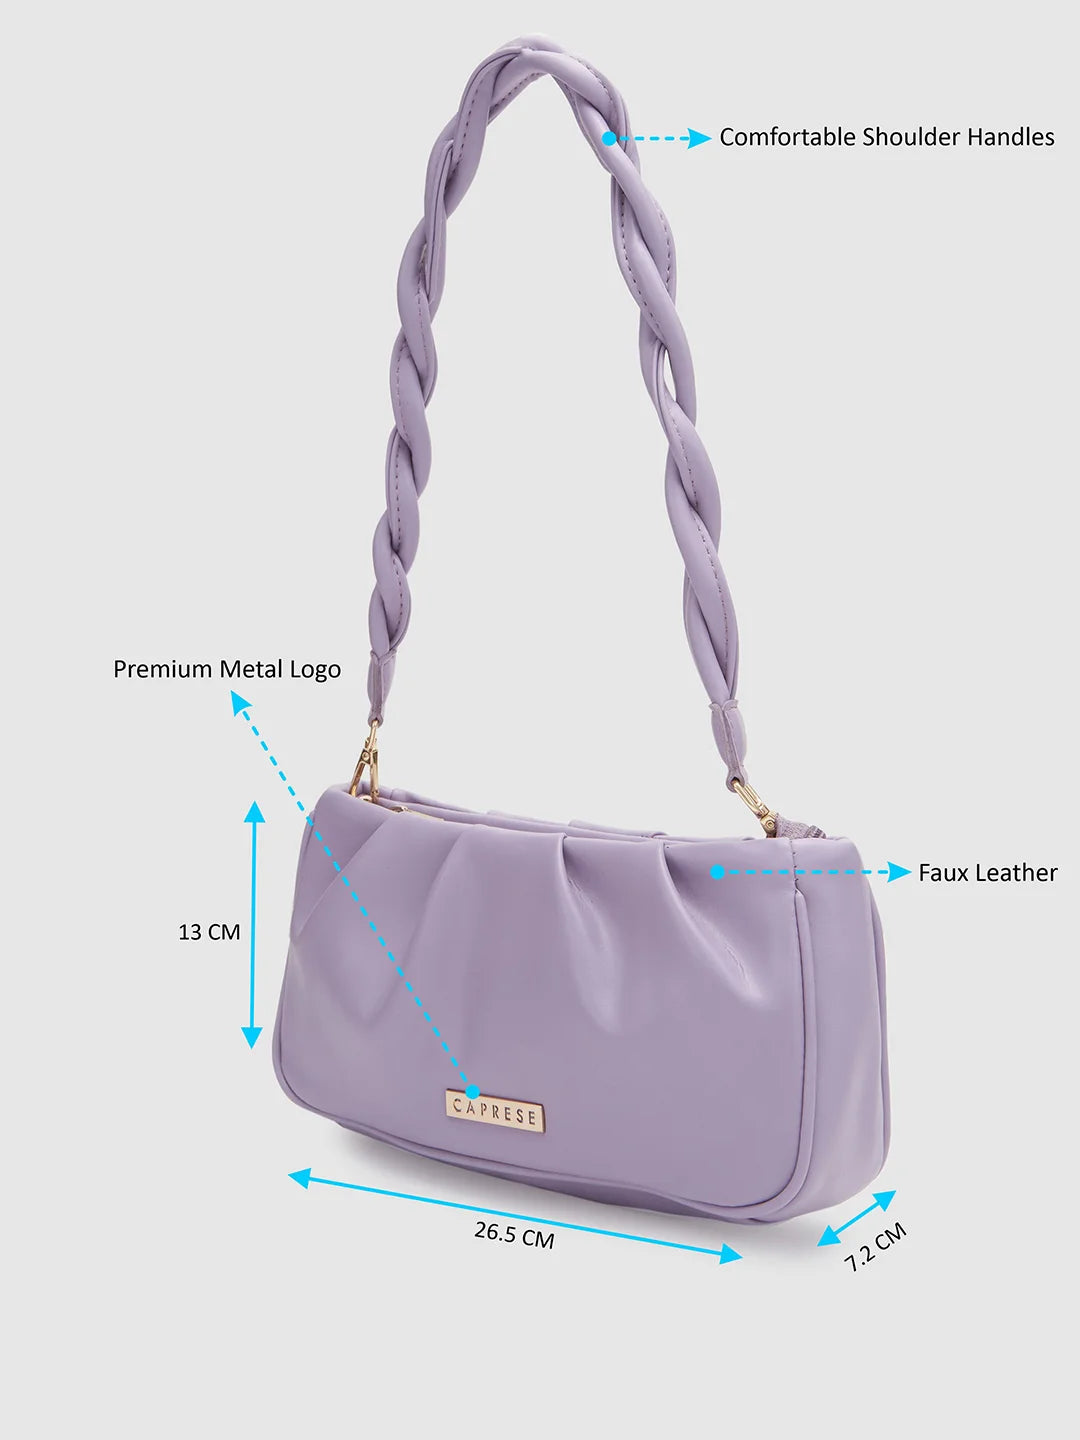 Caprese Emily in Paris Solid Medium Sling Handbag